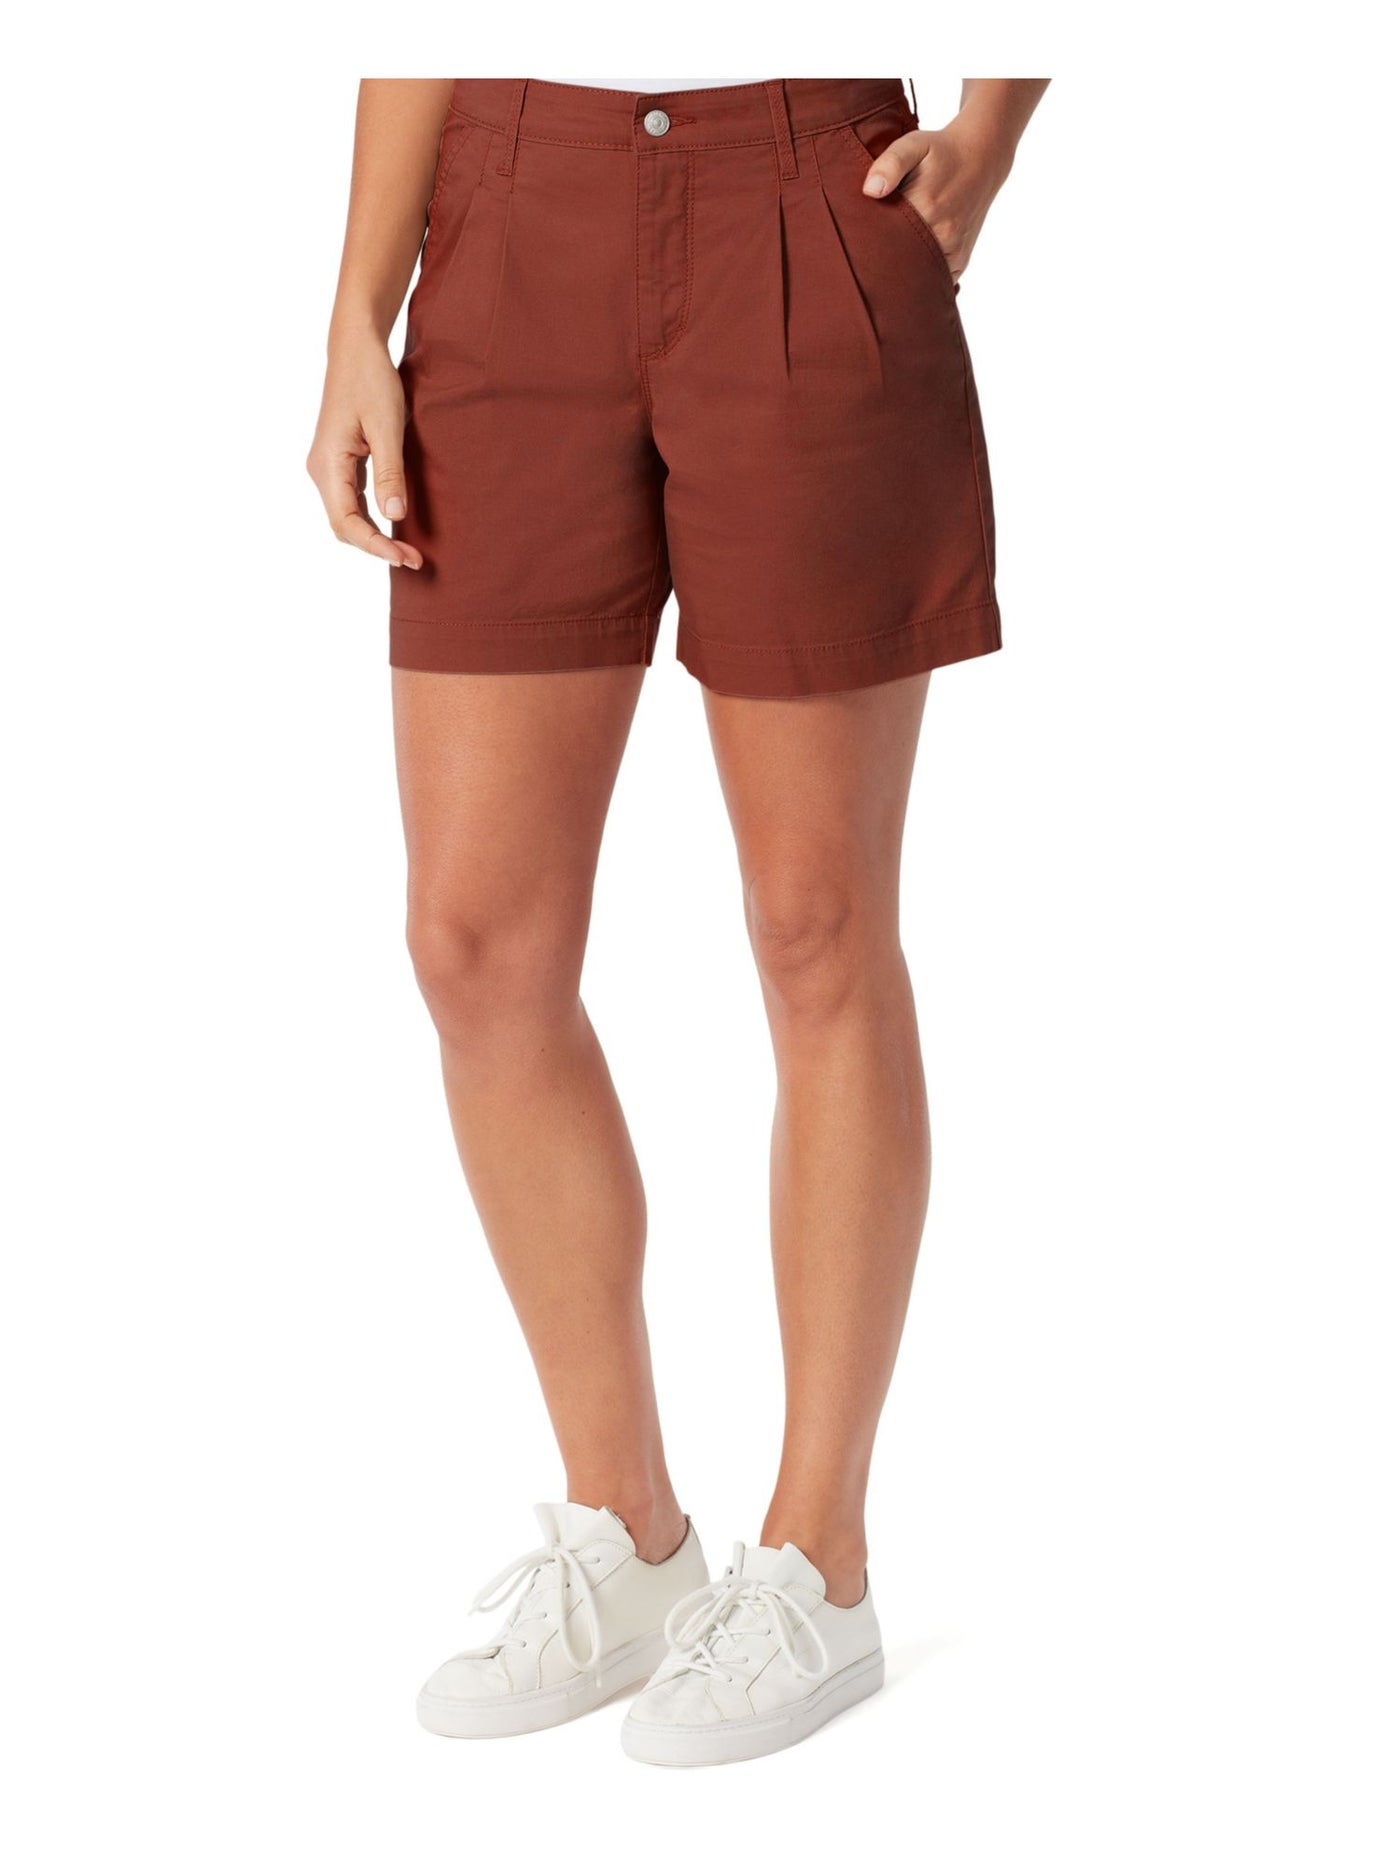 GLORIA VANDERBILT Womens Orange Zippered Pocketed Pleated High Waist Shorts 8